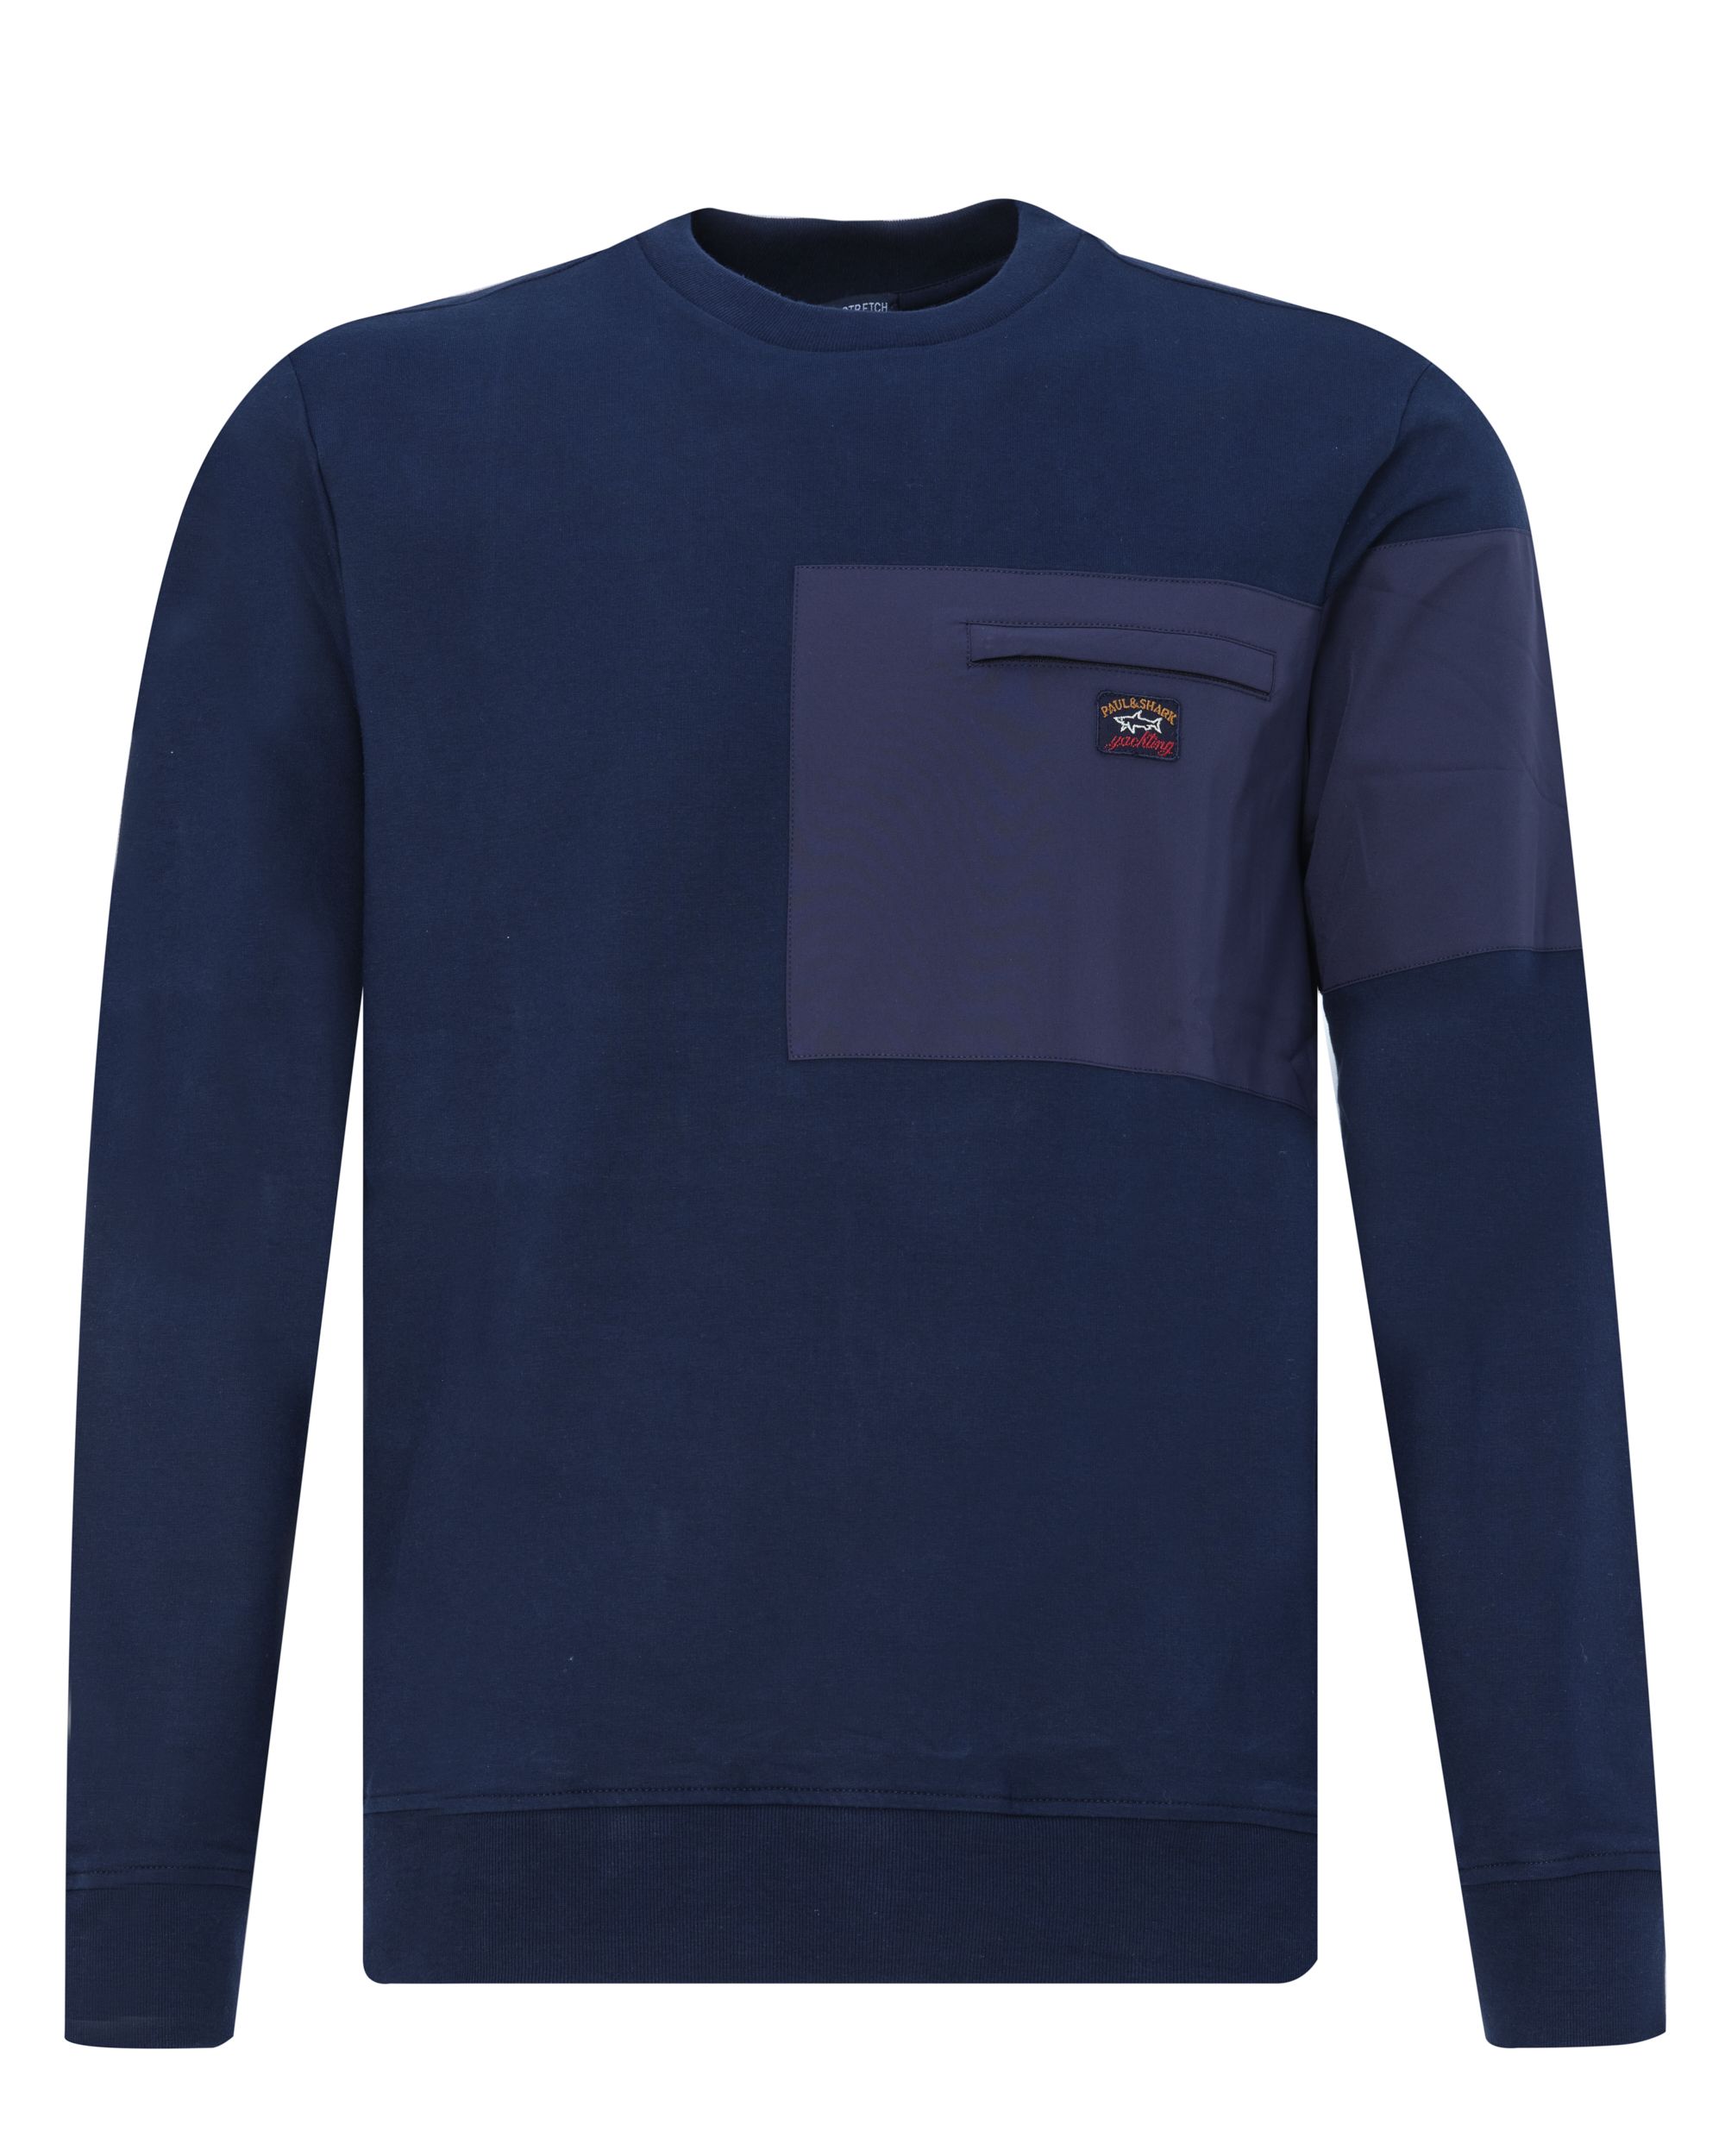 Paul & Shark Sweater Donker blauw 080385-002-L